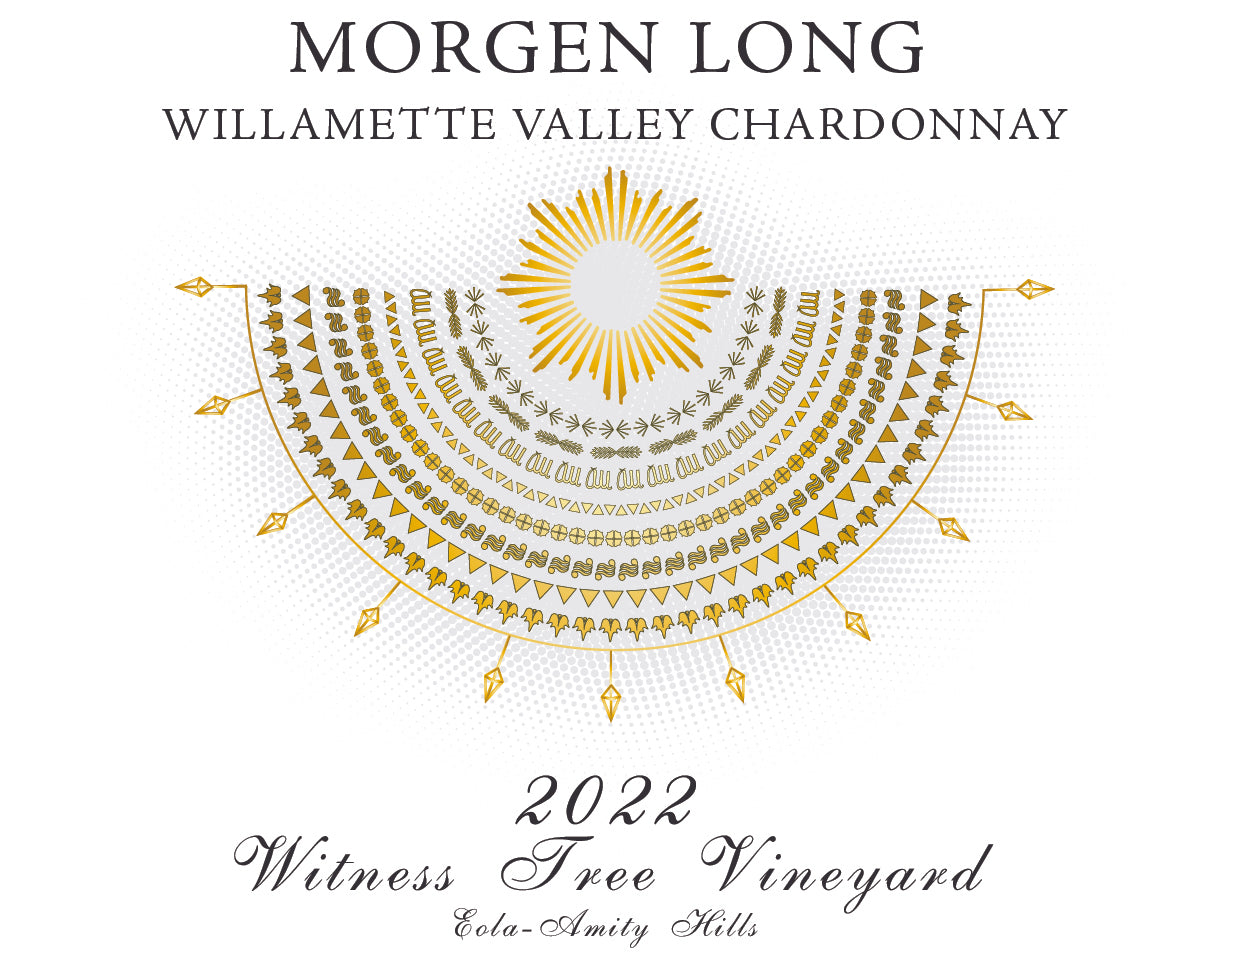 Morgen Long Witness Tree Vineyard Chardonnay 2022